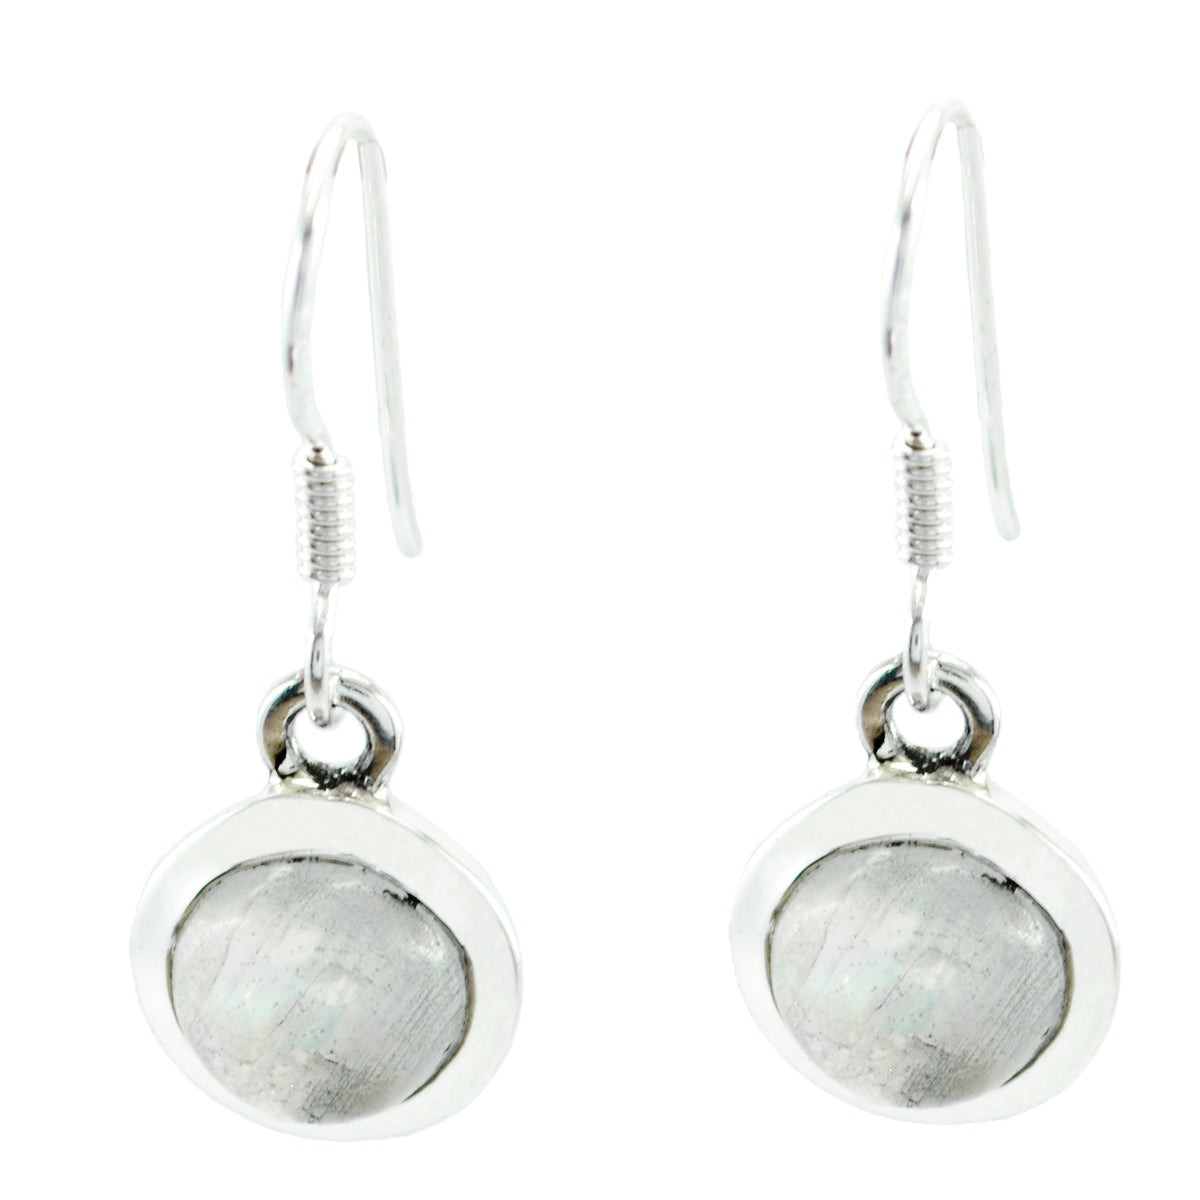 Riyo Good Gemstones round Cabochon White Rainbow Moonstone Silver Earrings anniversary day gift